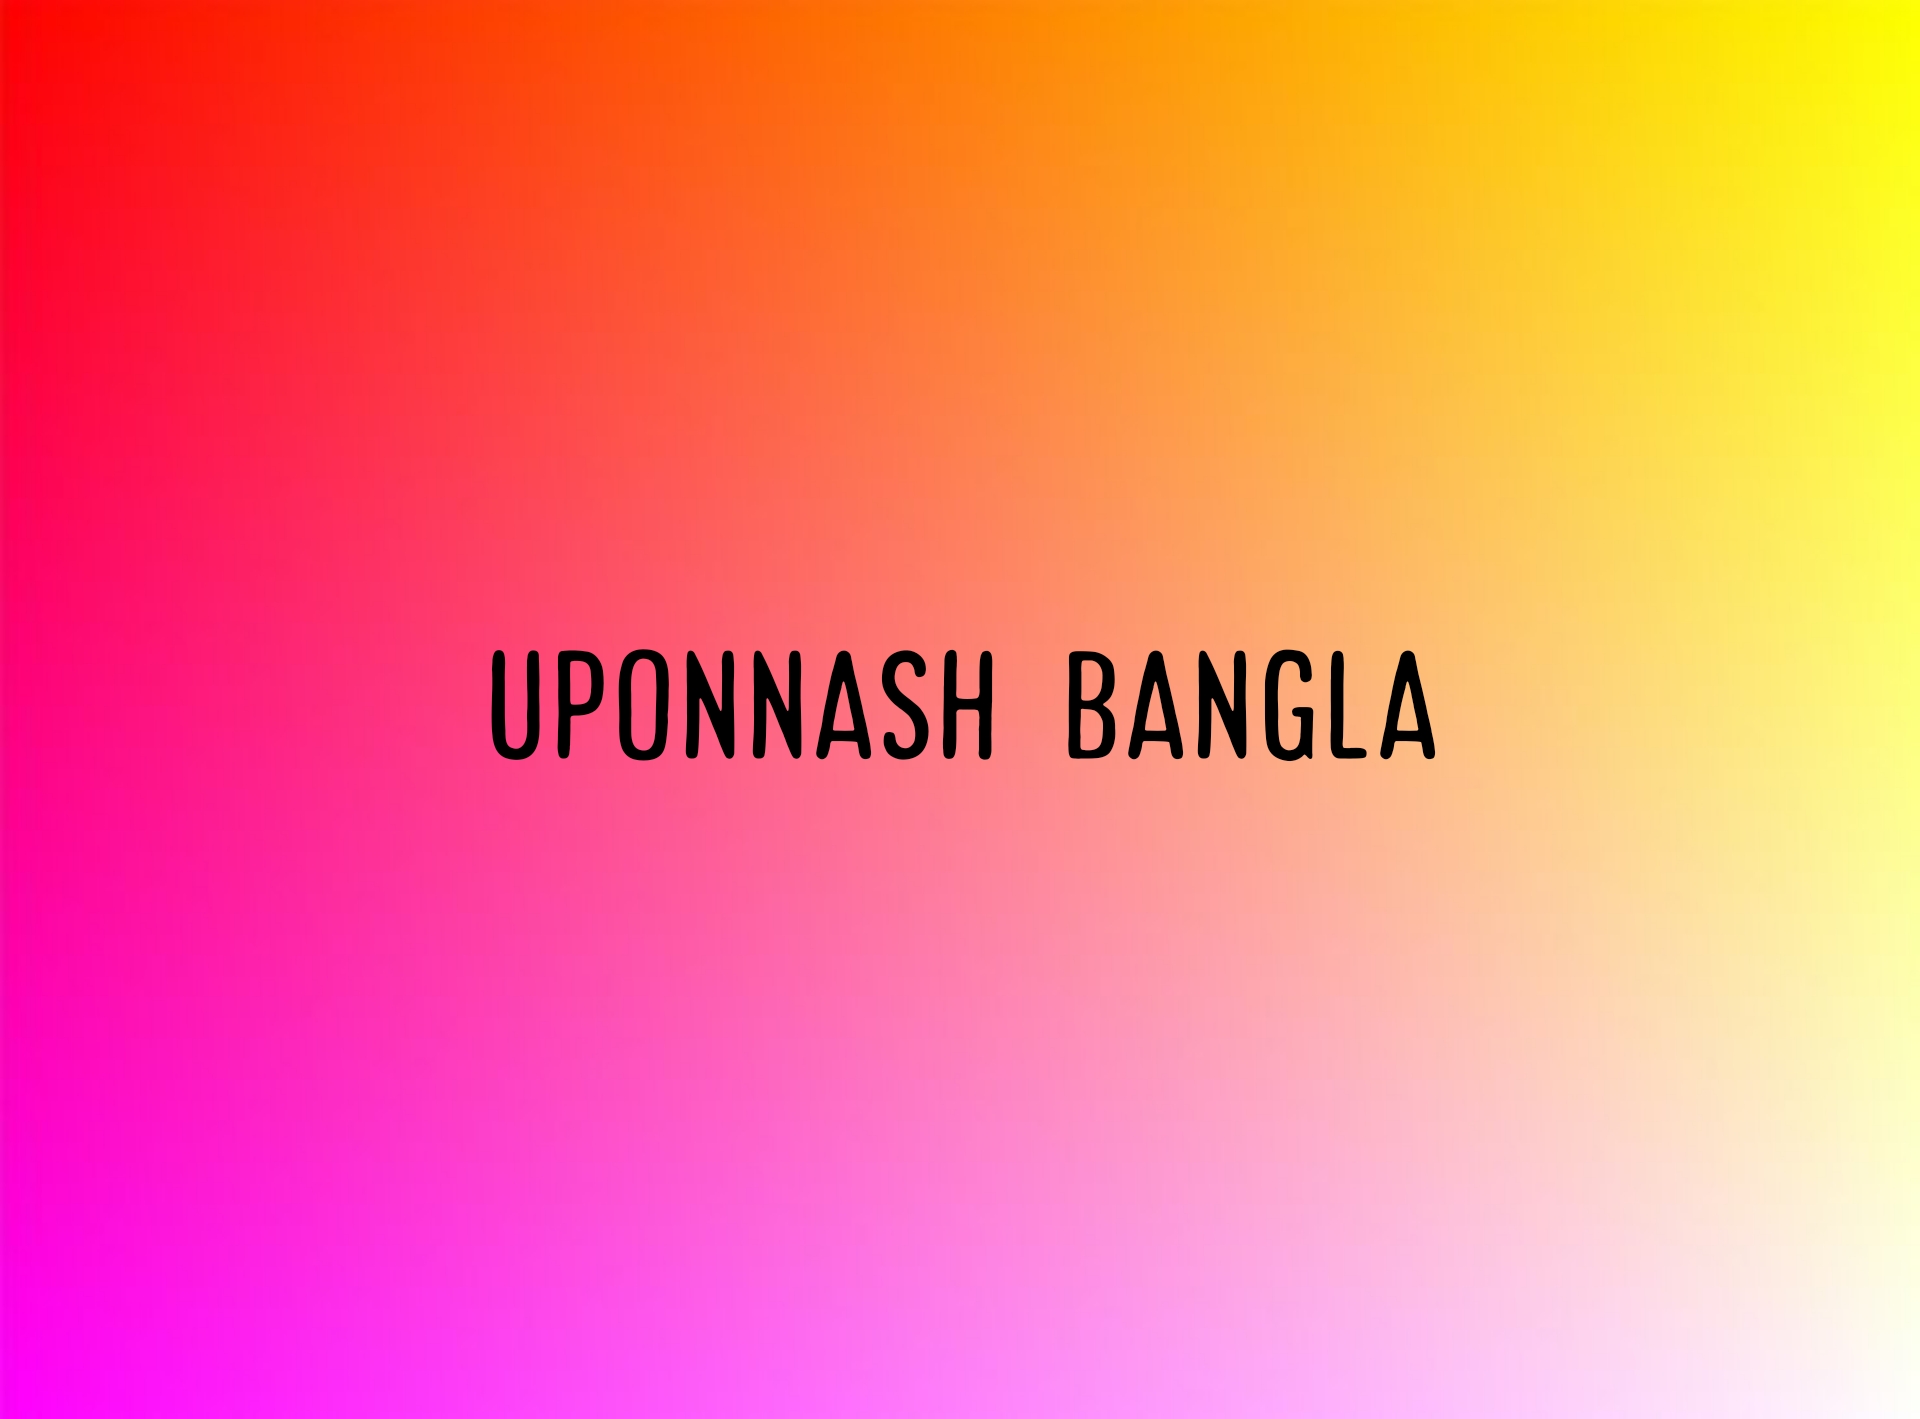 bangla uponnash book pdf download link, bangla uponnash book pdf download, bangla uponnash book pdf, bangla uponnash book,